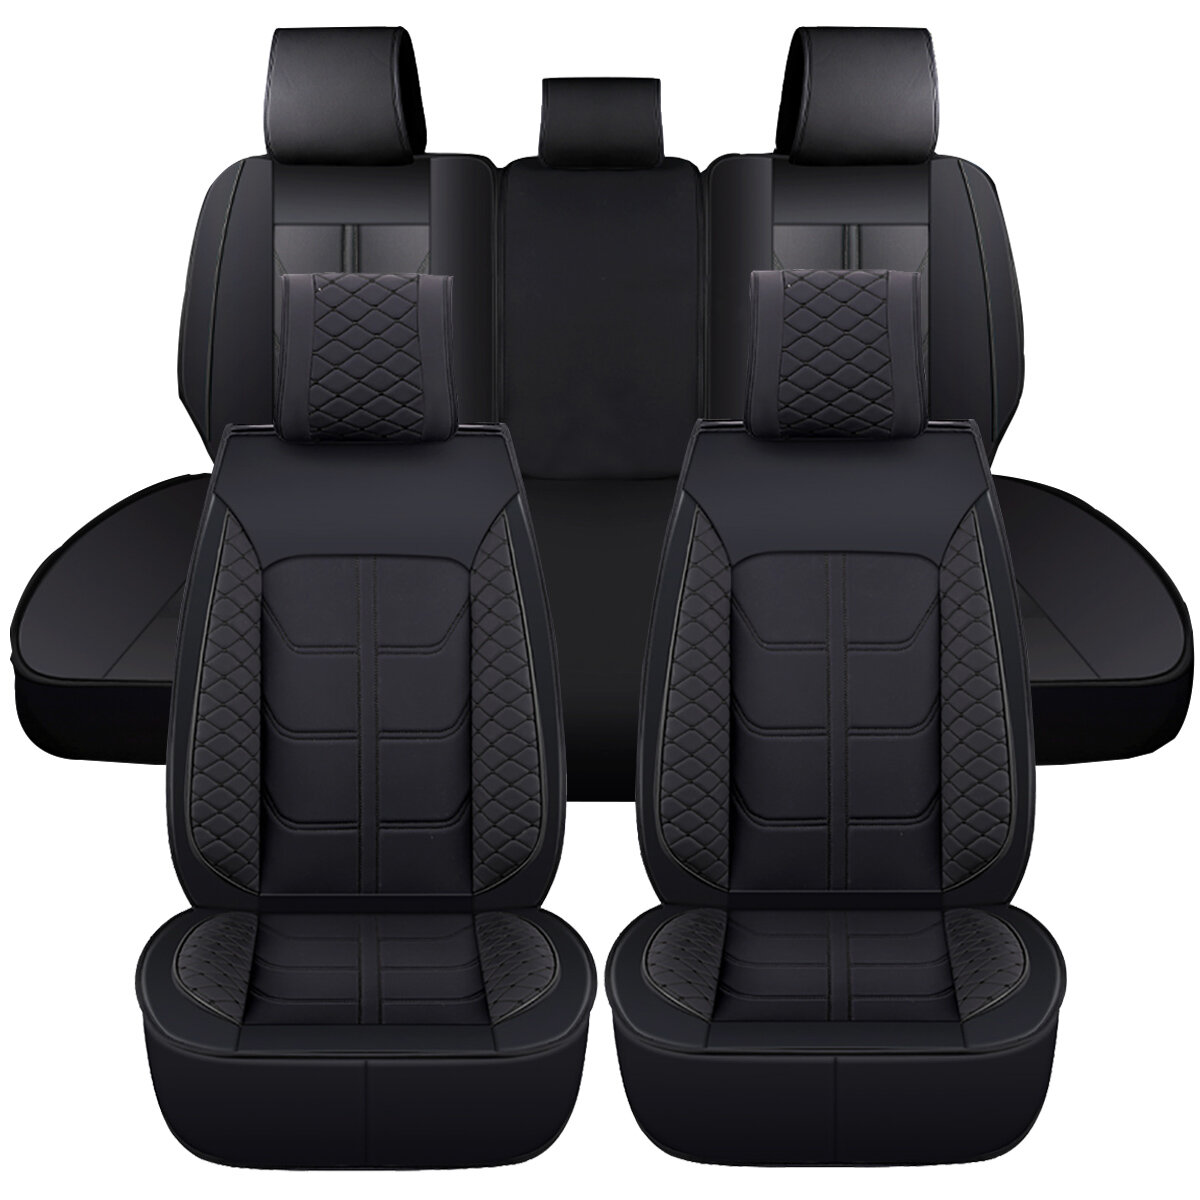 

5 Seaters ELUTO Full Car Seat Cover For Chevy Silverado Sierra 1500 2500/3500HD